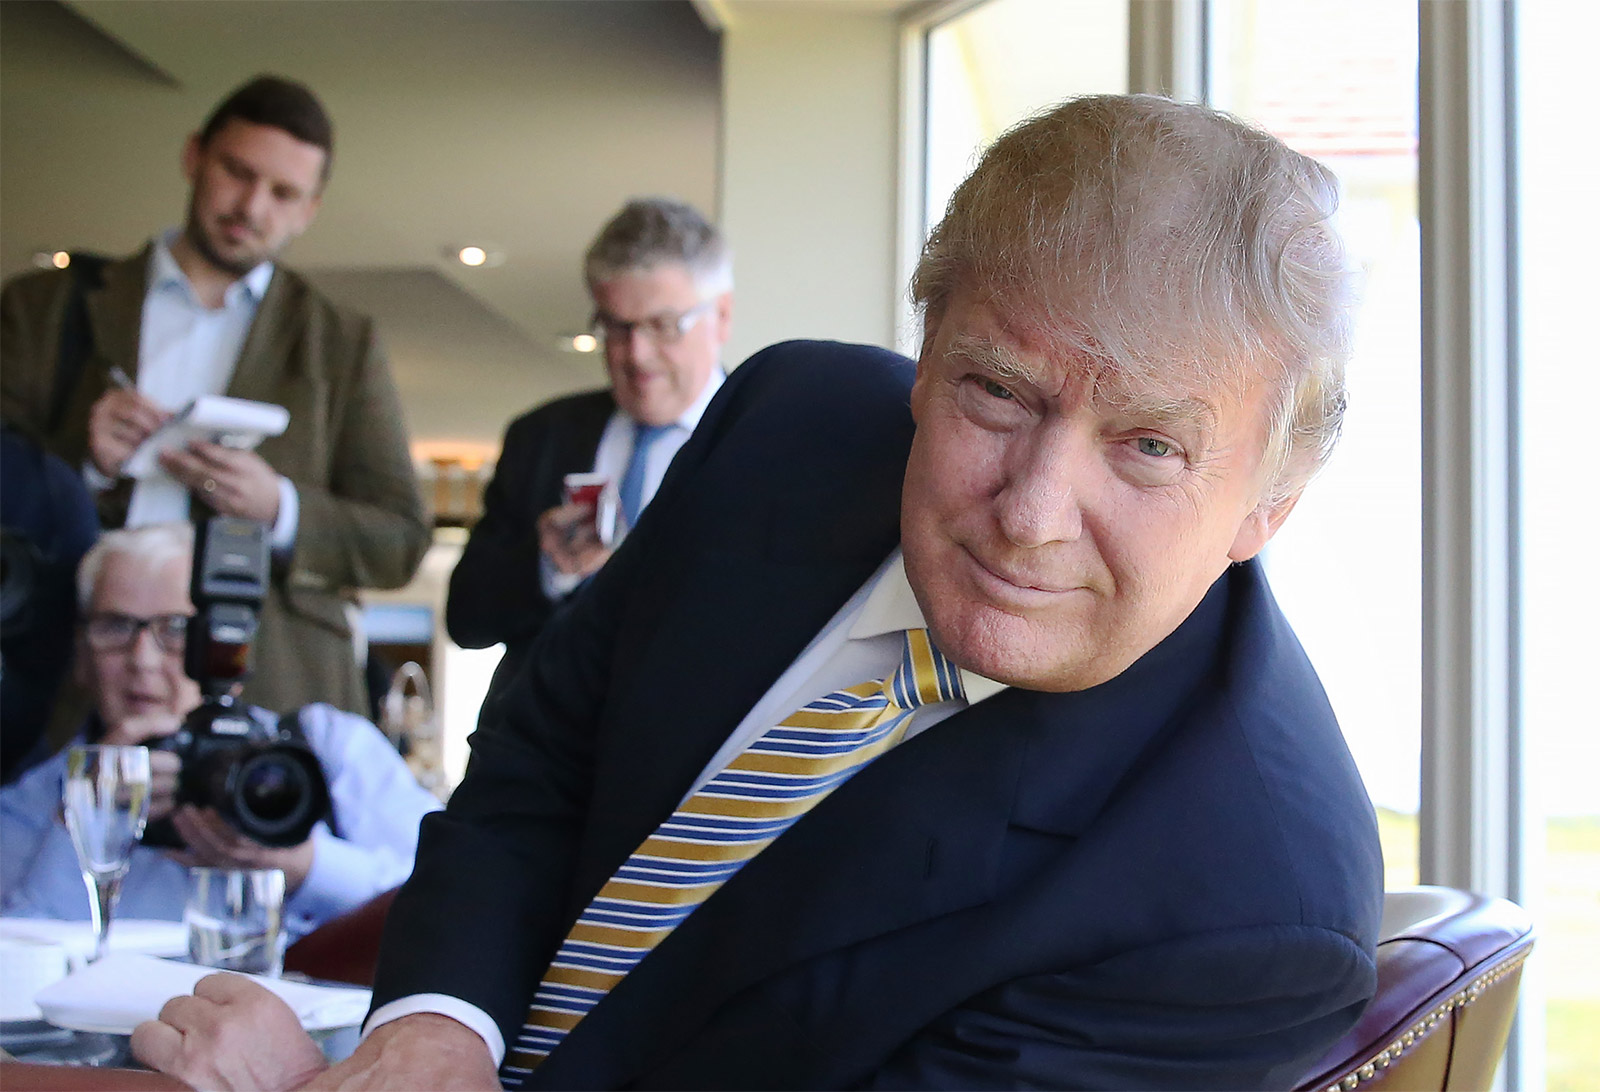 Donald Trump at Turnberry golf club, Scotland, June 2015